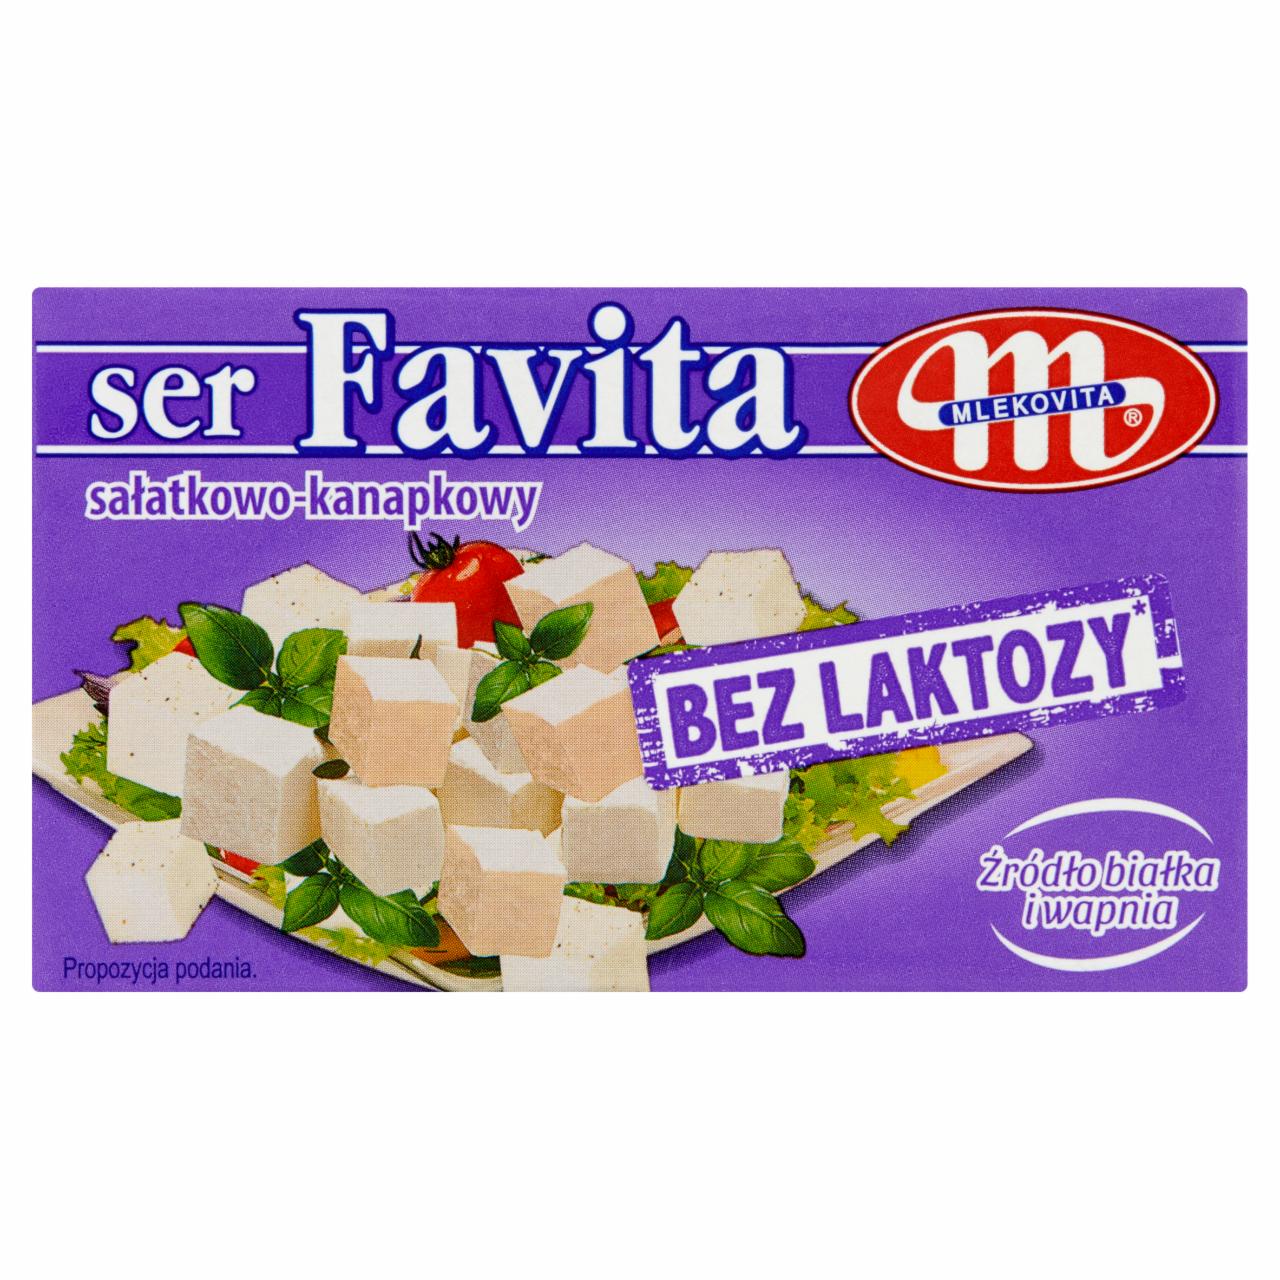 Фото - сыр Фавита Favita без лактозы 18% Mlekovita